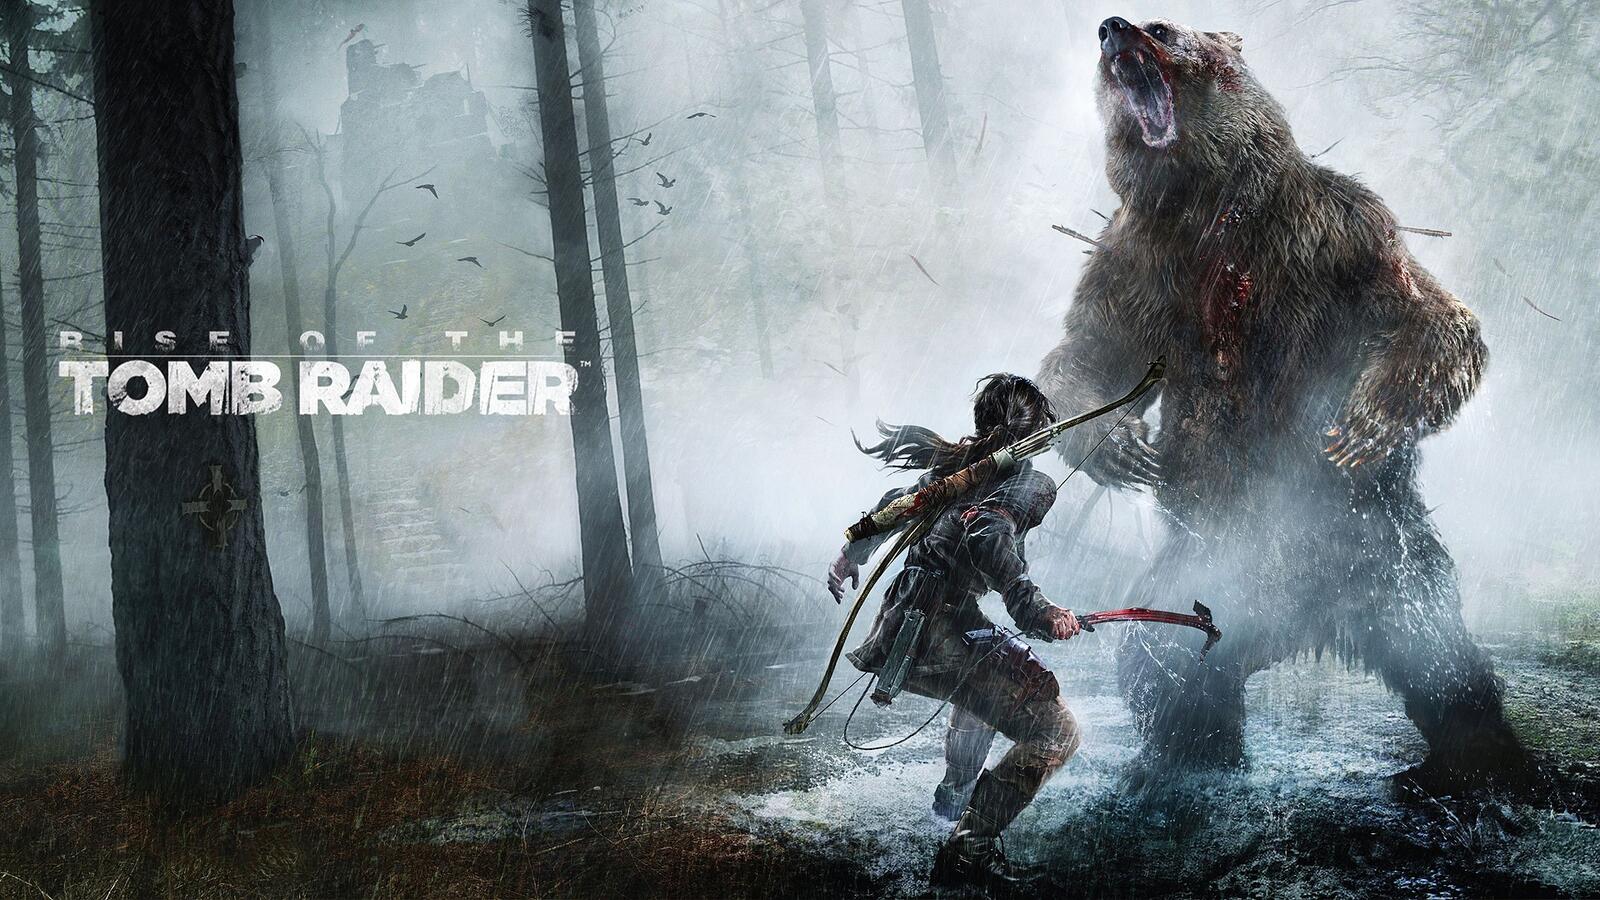 Wallpapers rise of the tomb raider Lara Croft bear on the desktop